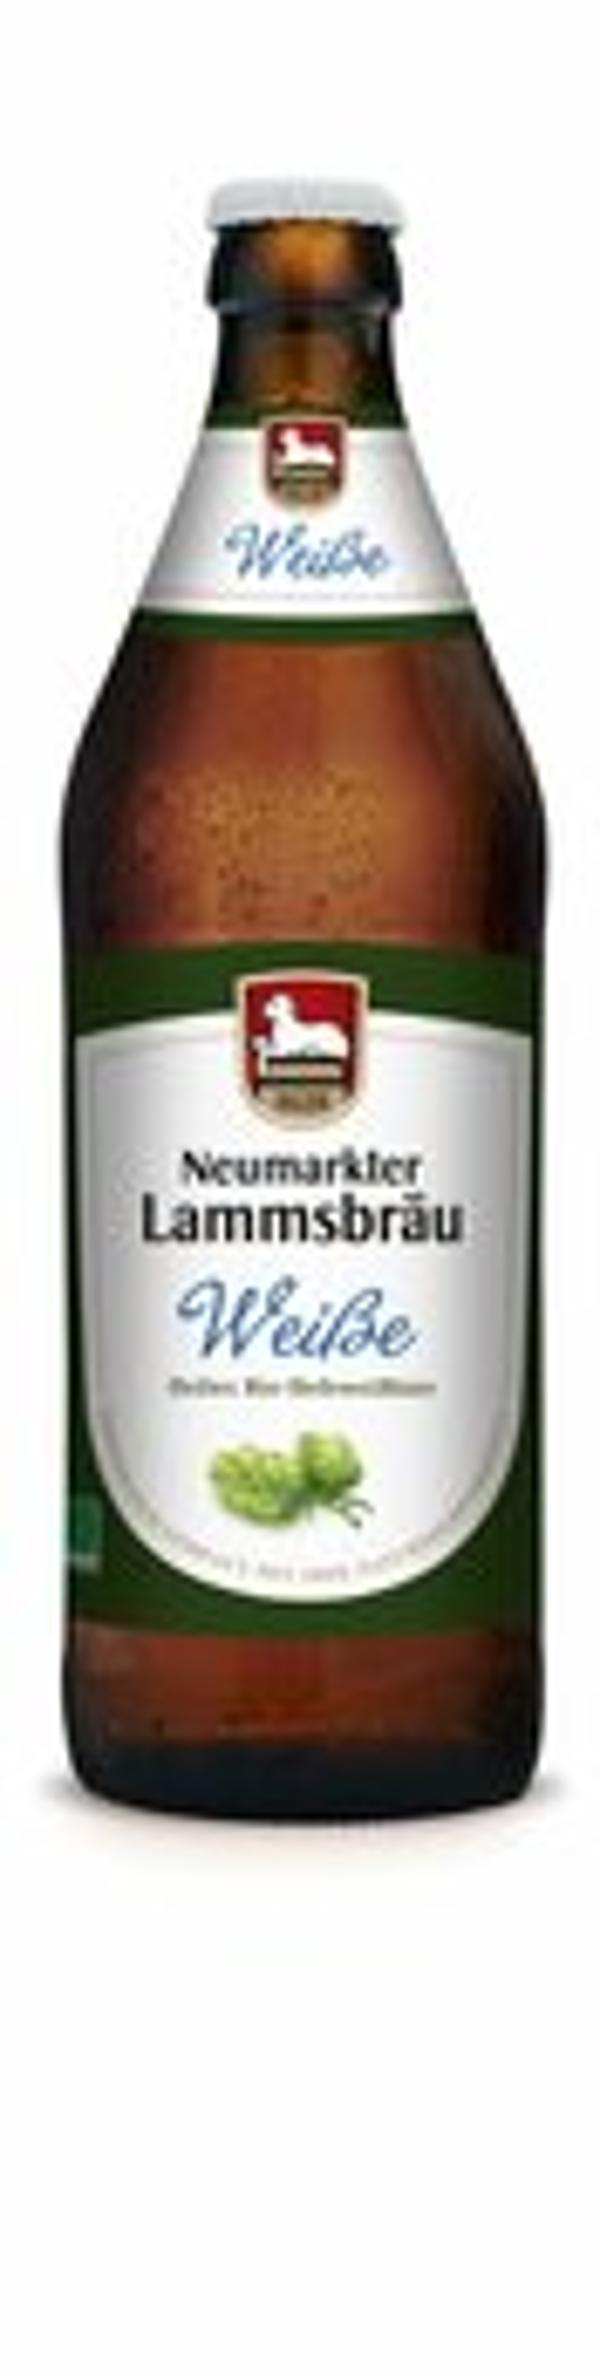 Produktfoto zu Lammsbräu Weiße hell 0,5l